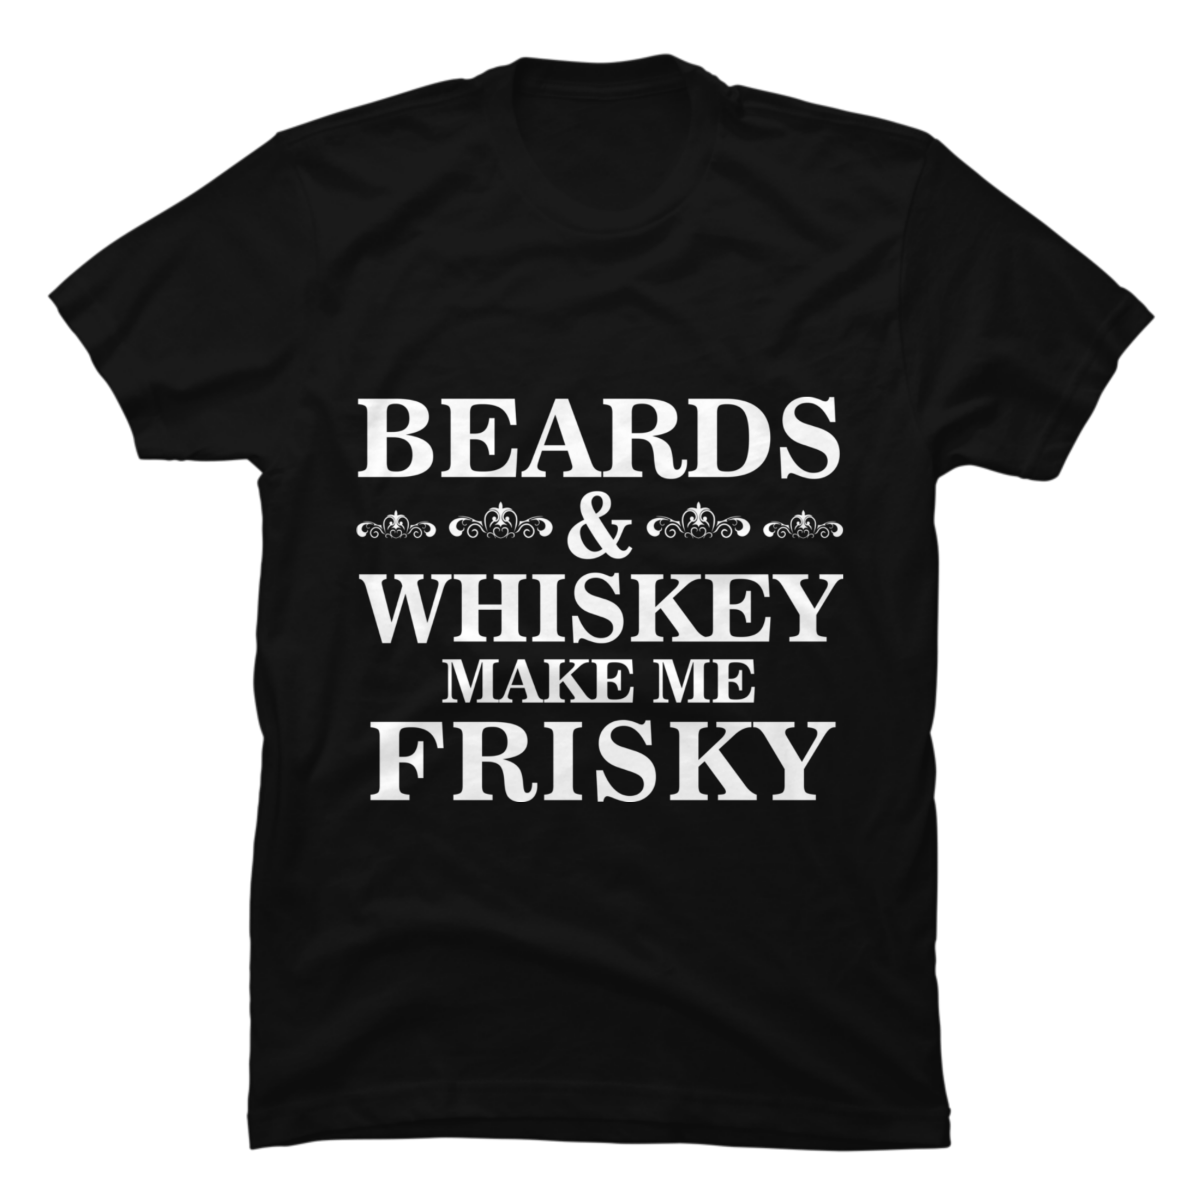 whiskey makes me frisky t shirt